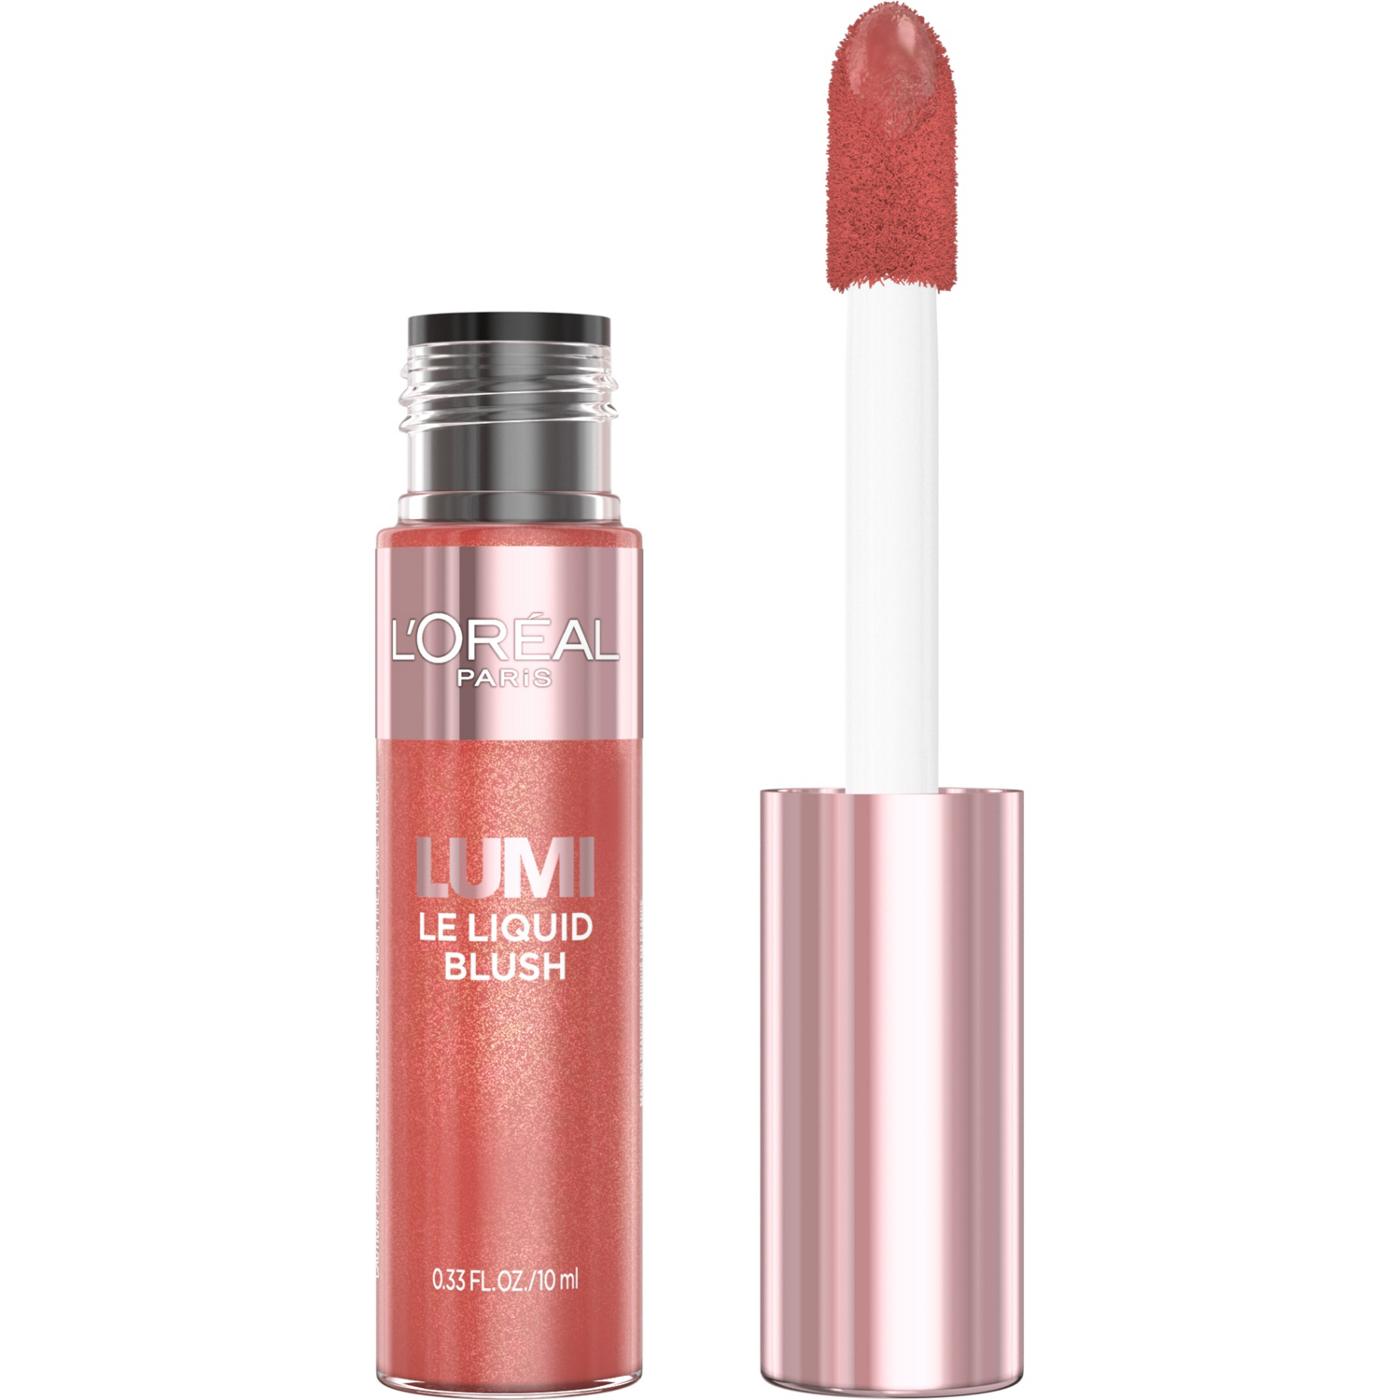 L'Oréal Paris True Match Lumi Liquid Blush - Glowy True Rose; image 1 of 6